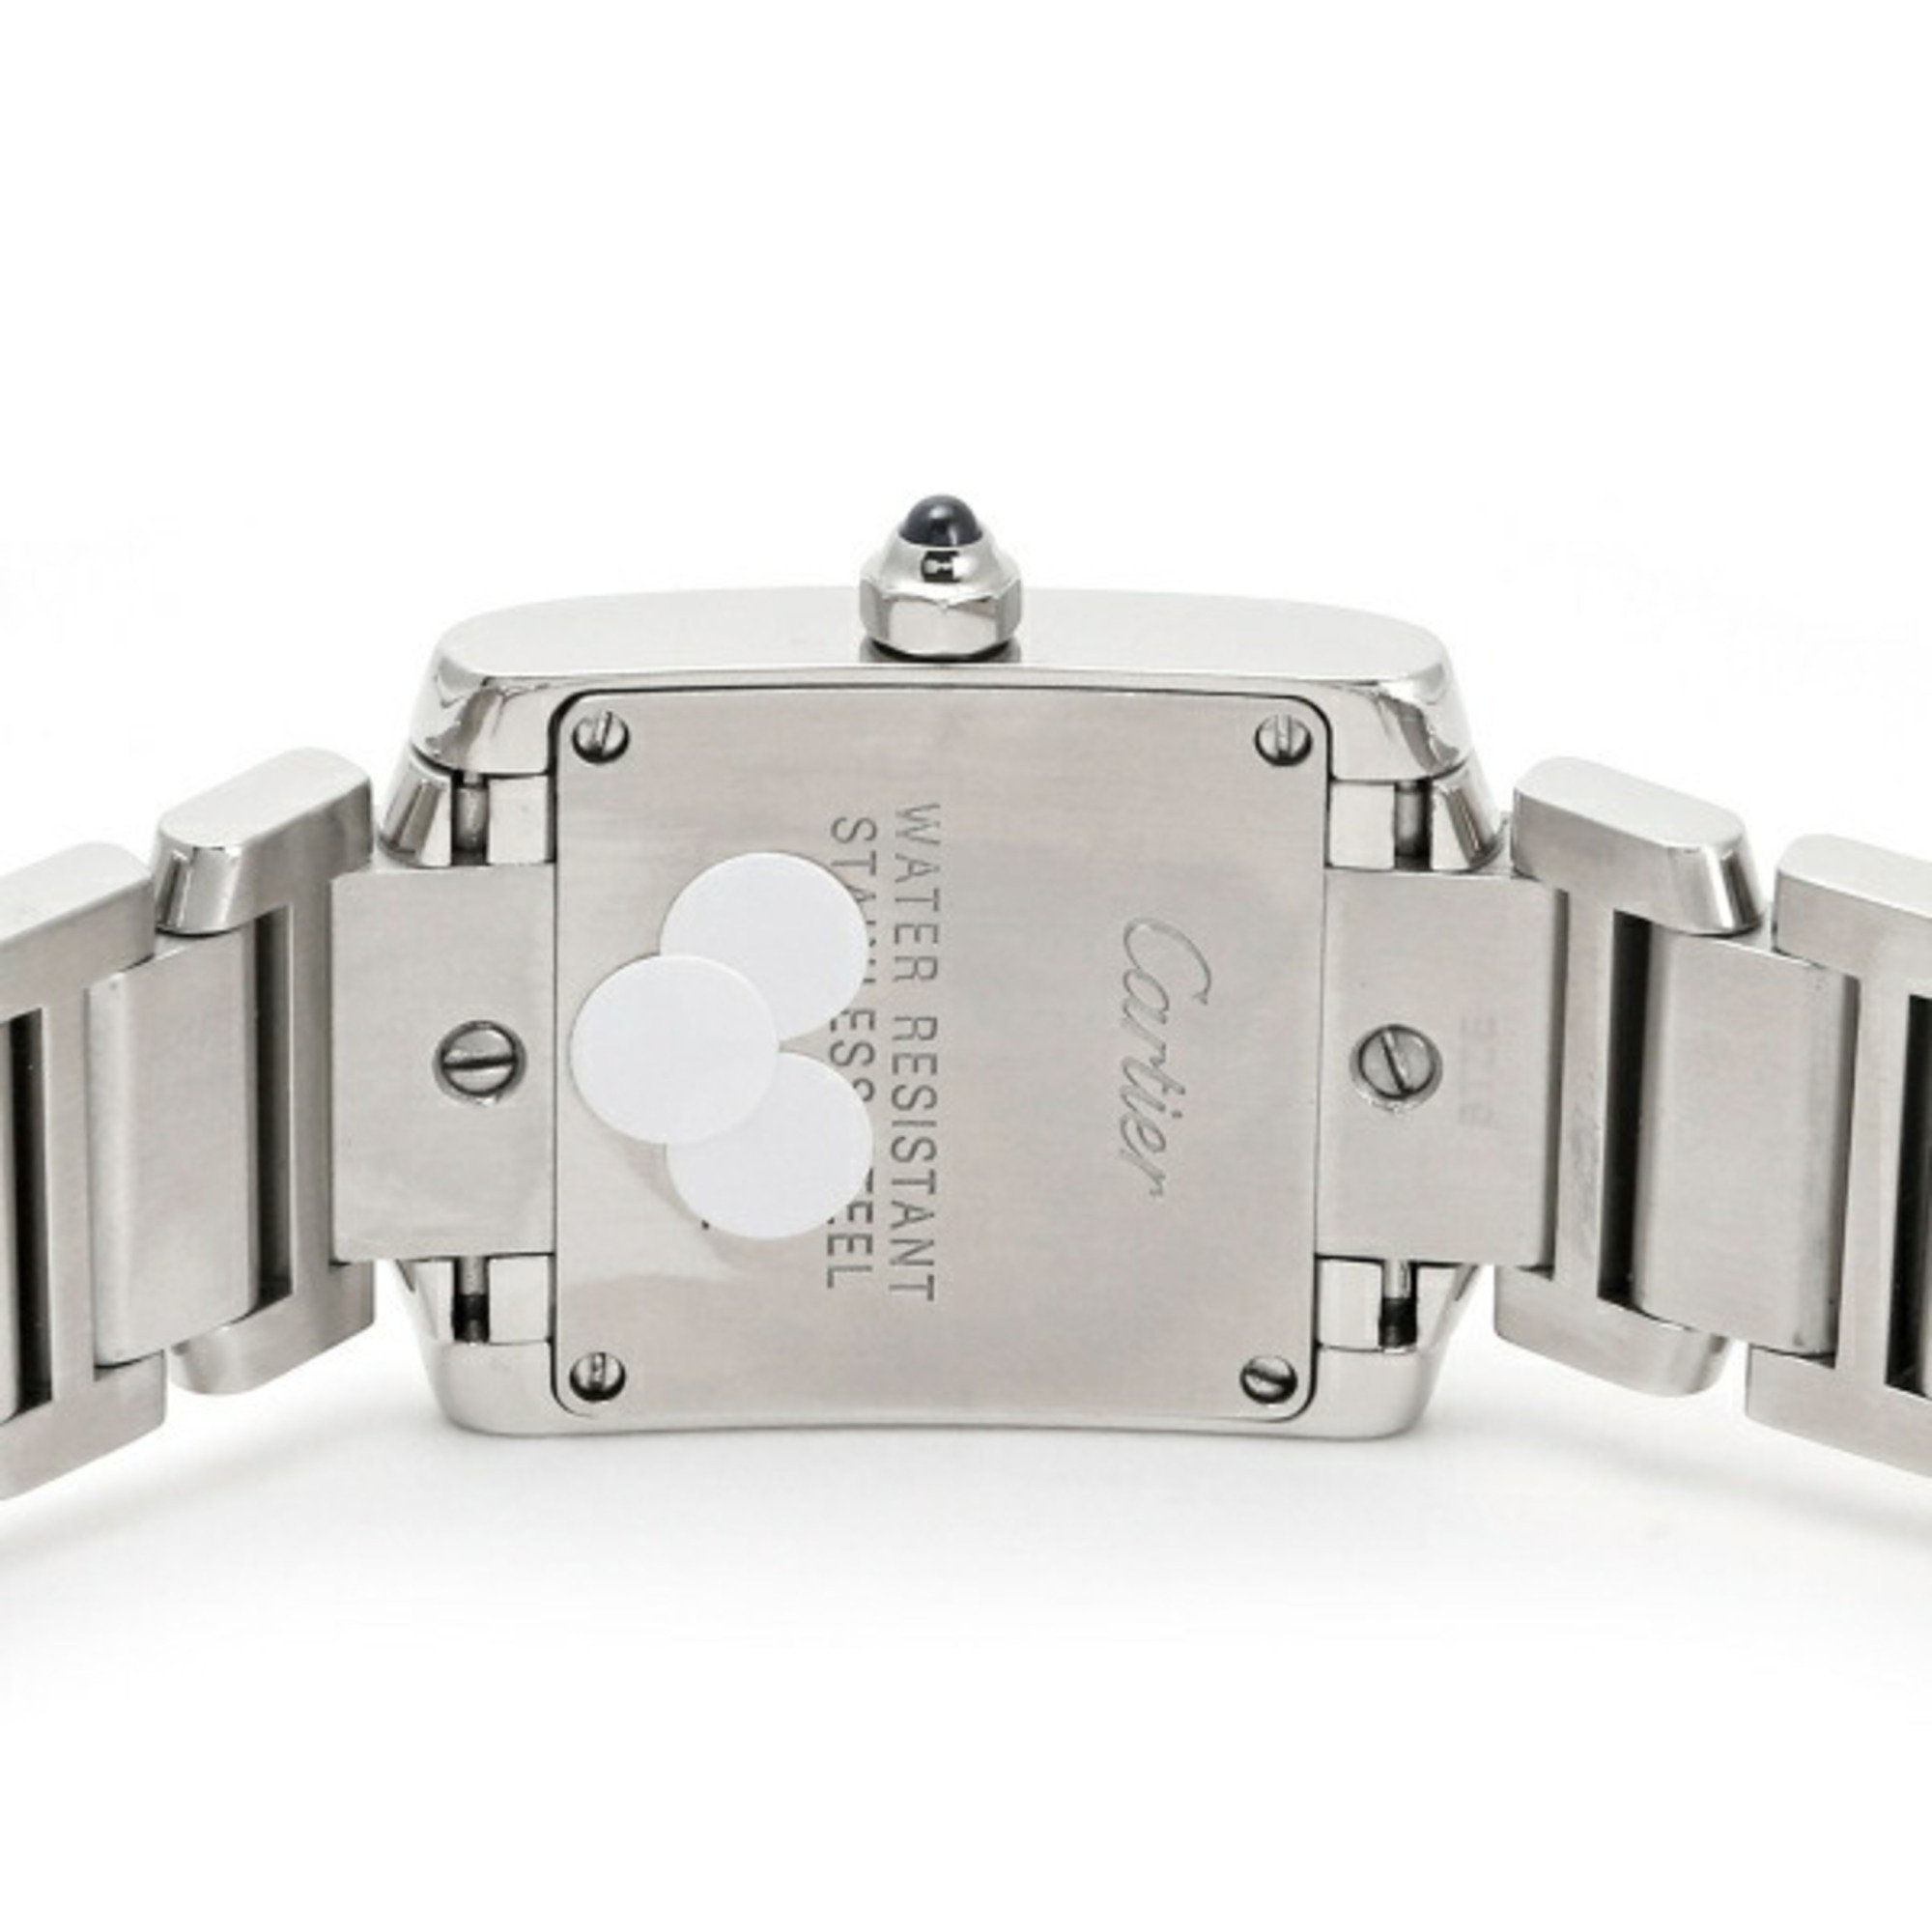 Cartier Tank Francaise SM W4TA0008 Silver Dial Women's Watch